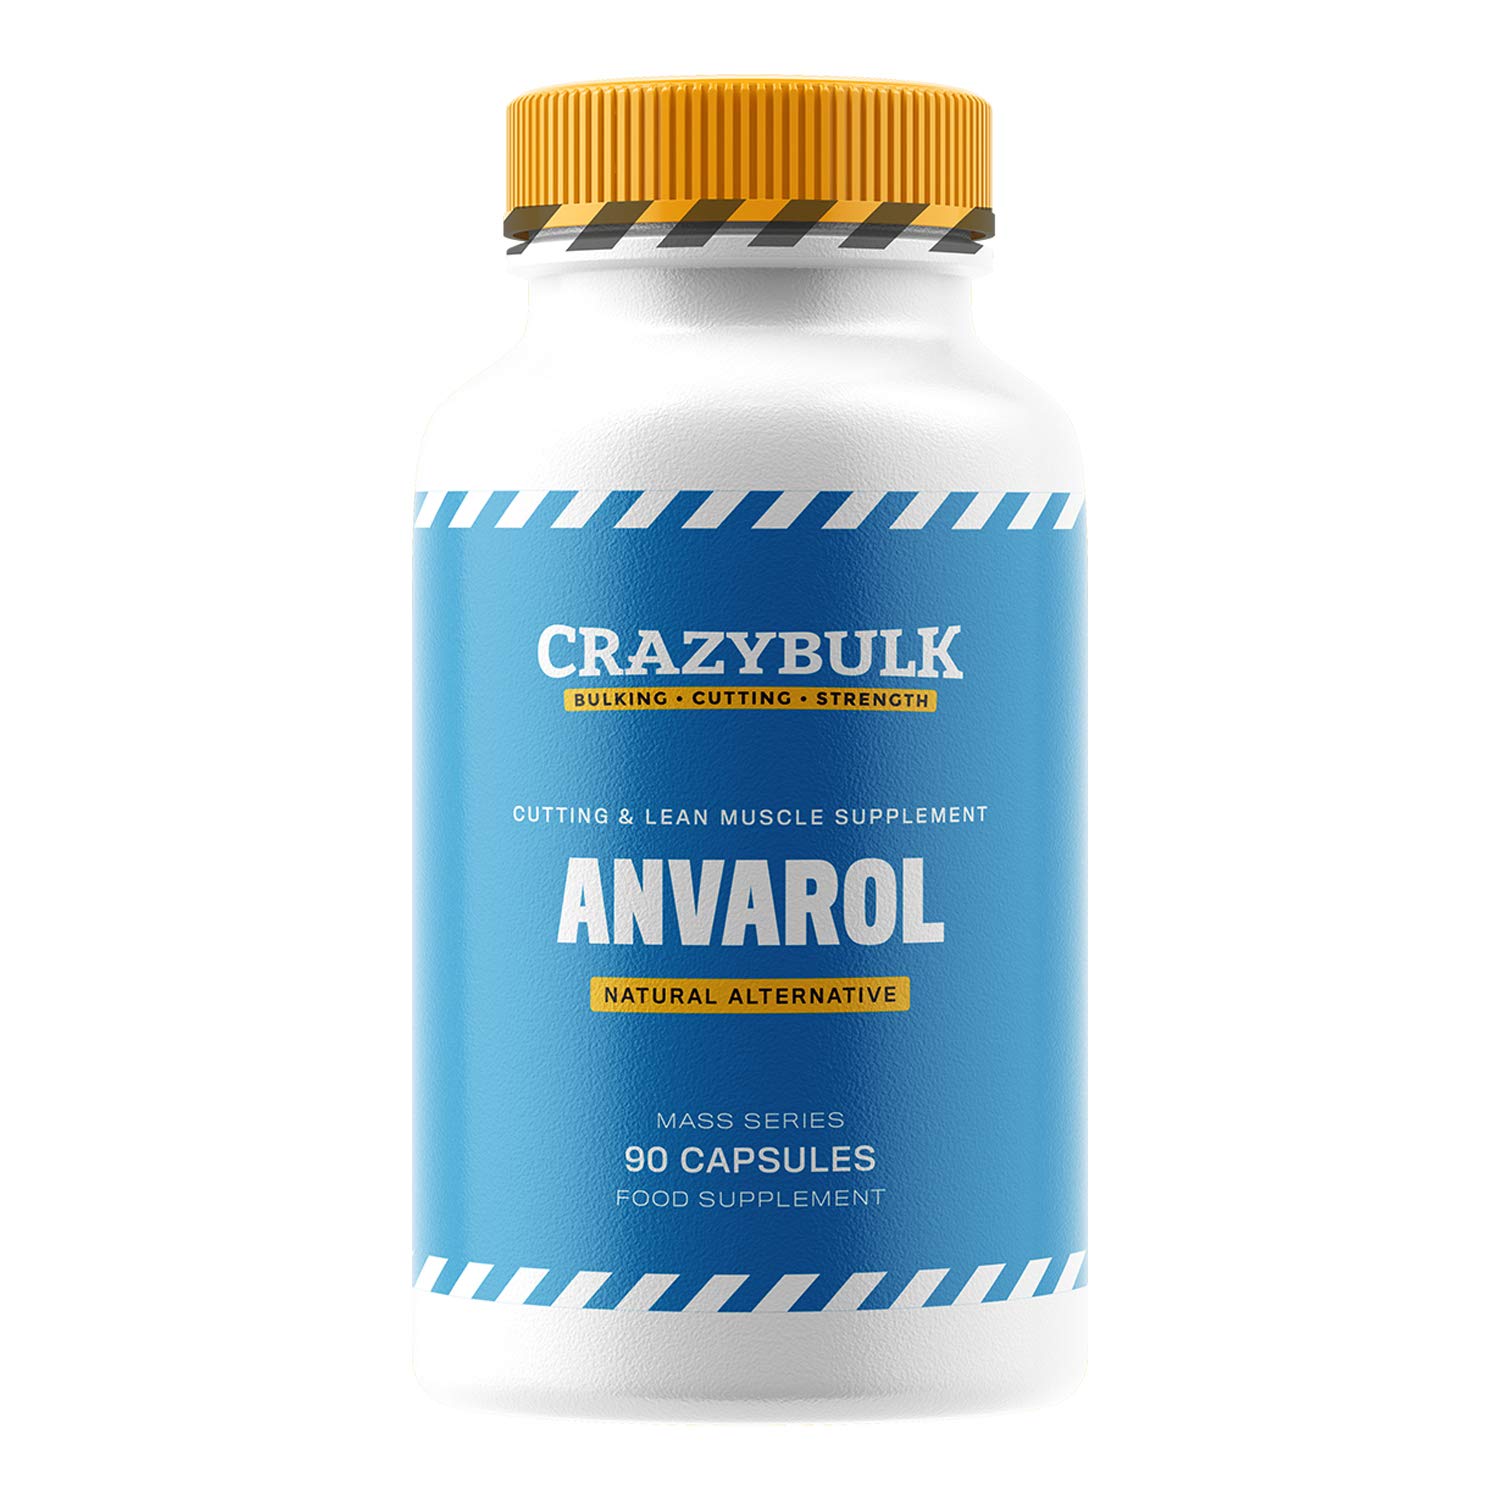 avarol - Does Anavar give you energy?